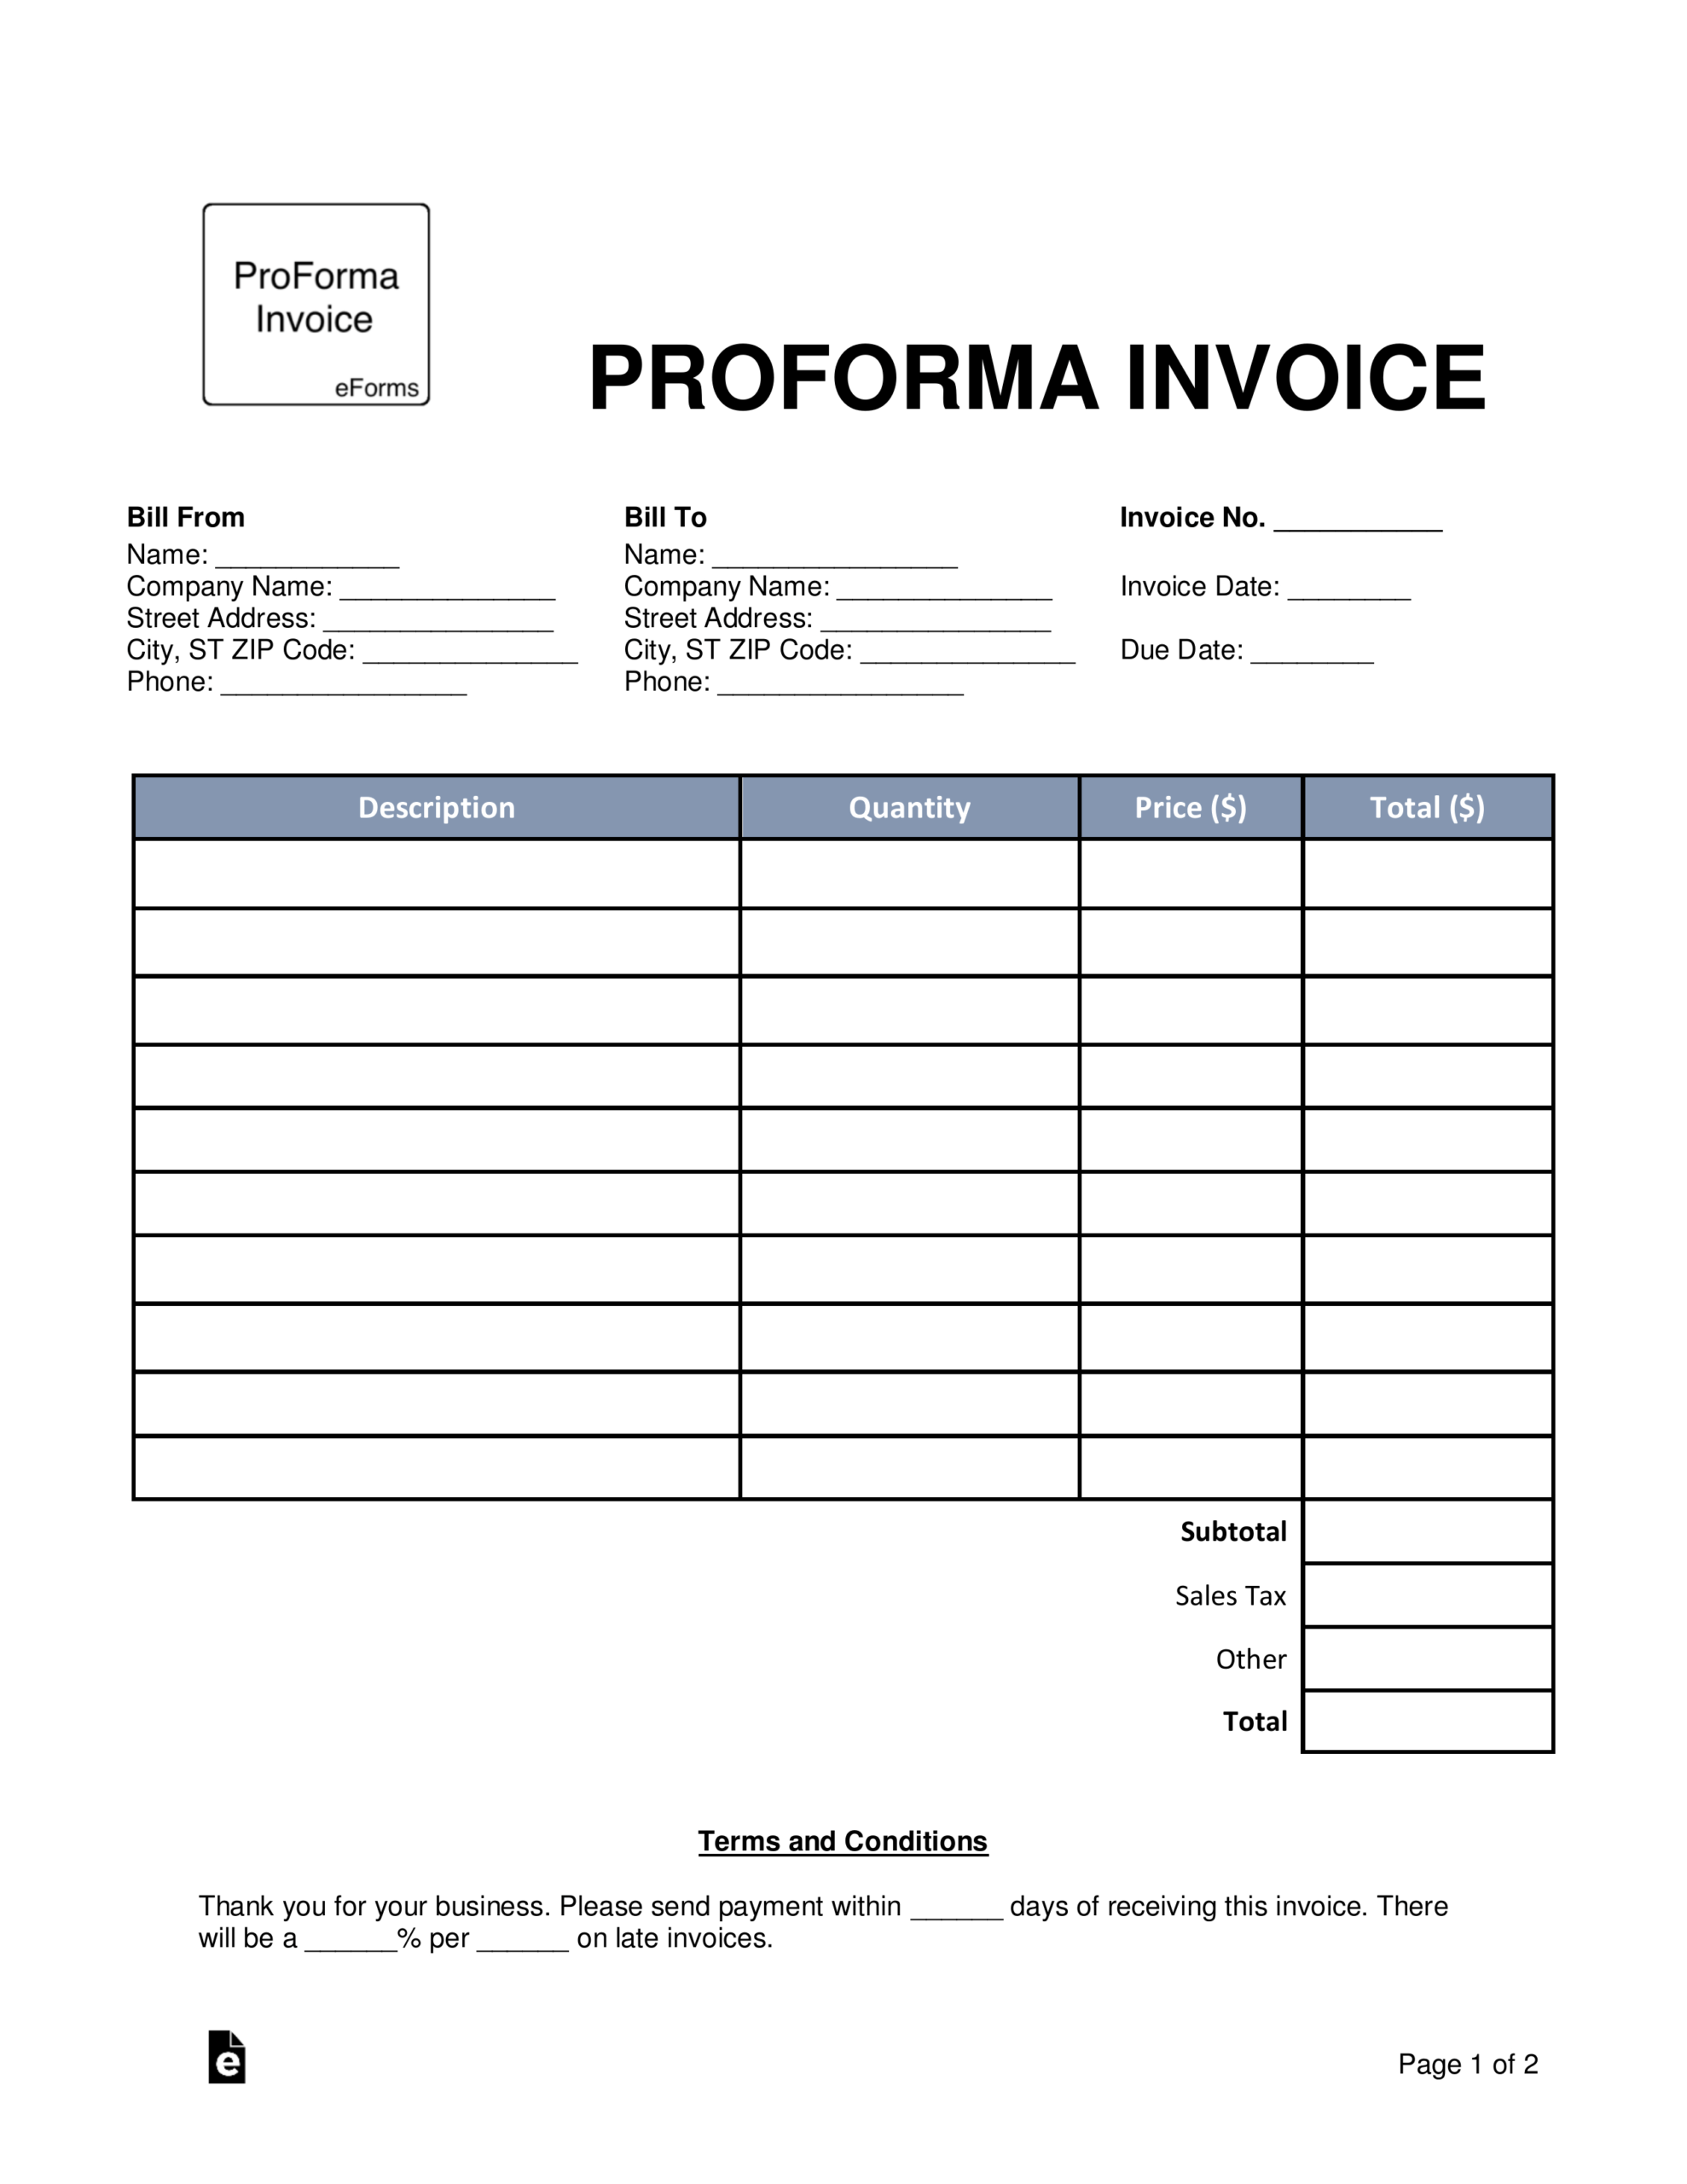 Free Proforma Invoice Template - Word | Pdf | Eforms – Free Throughout Free Proforma Invoice Template Word